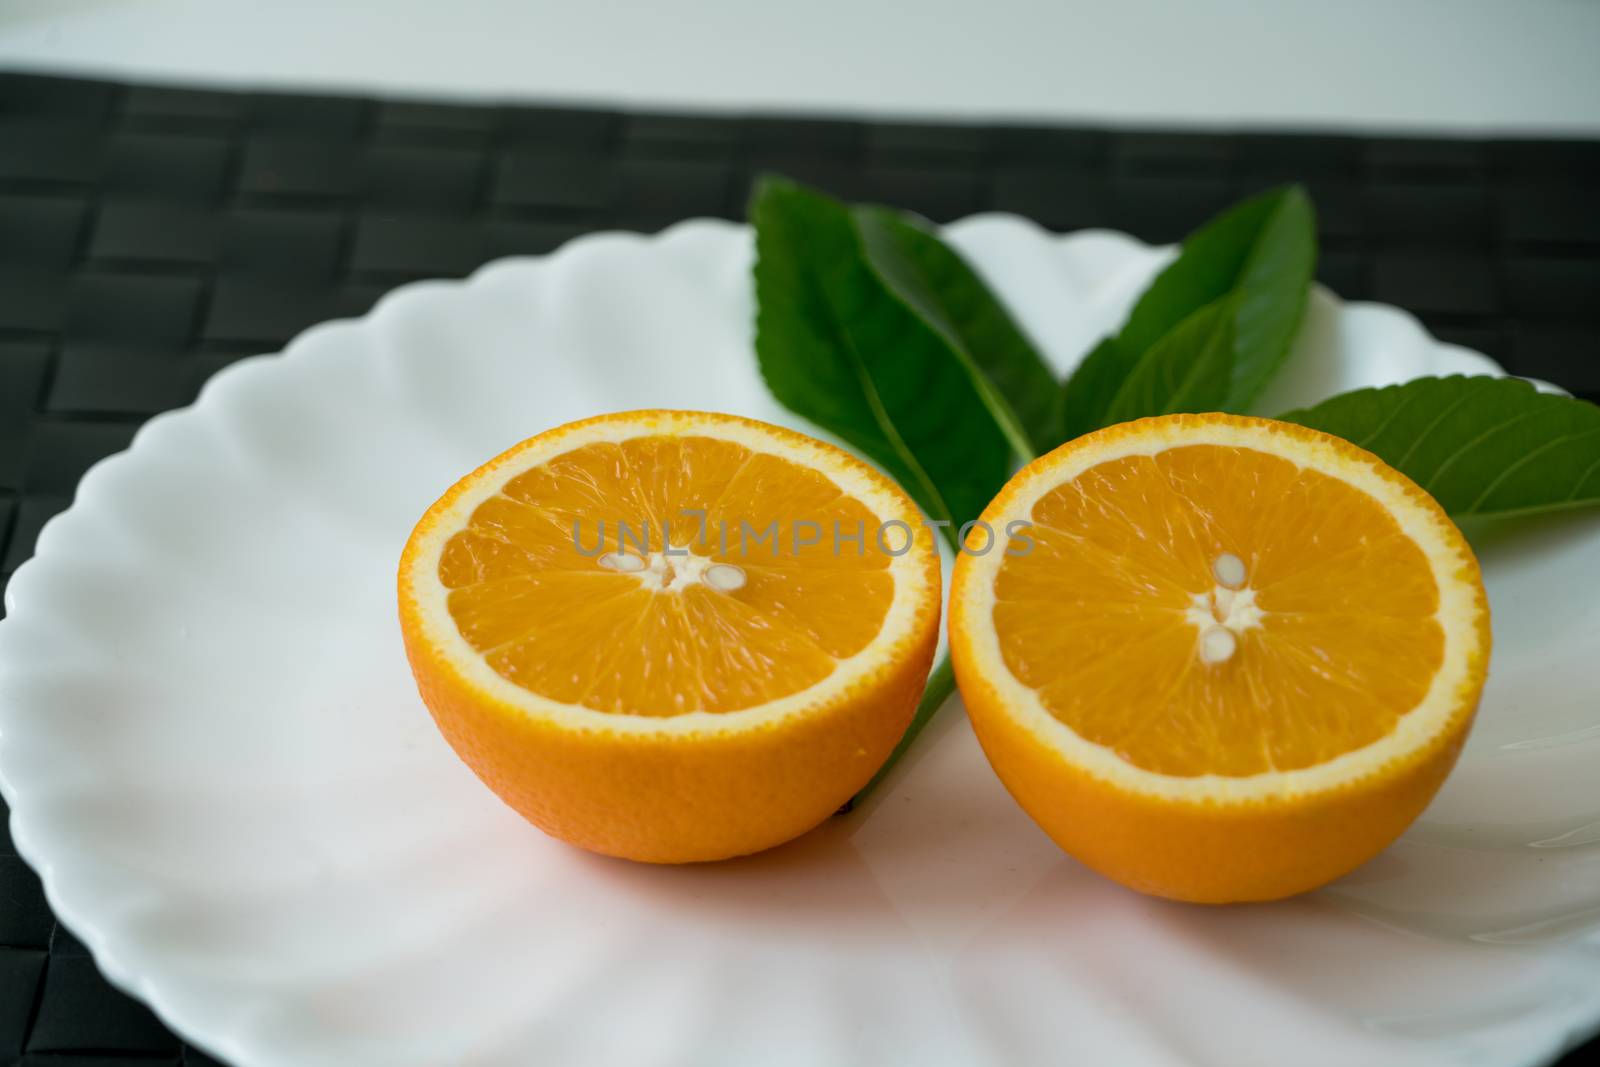 The organic slice orange on white plate - isolated